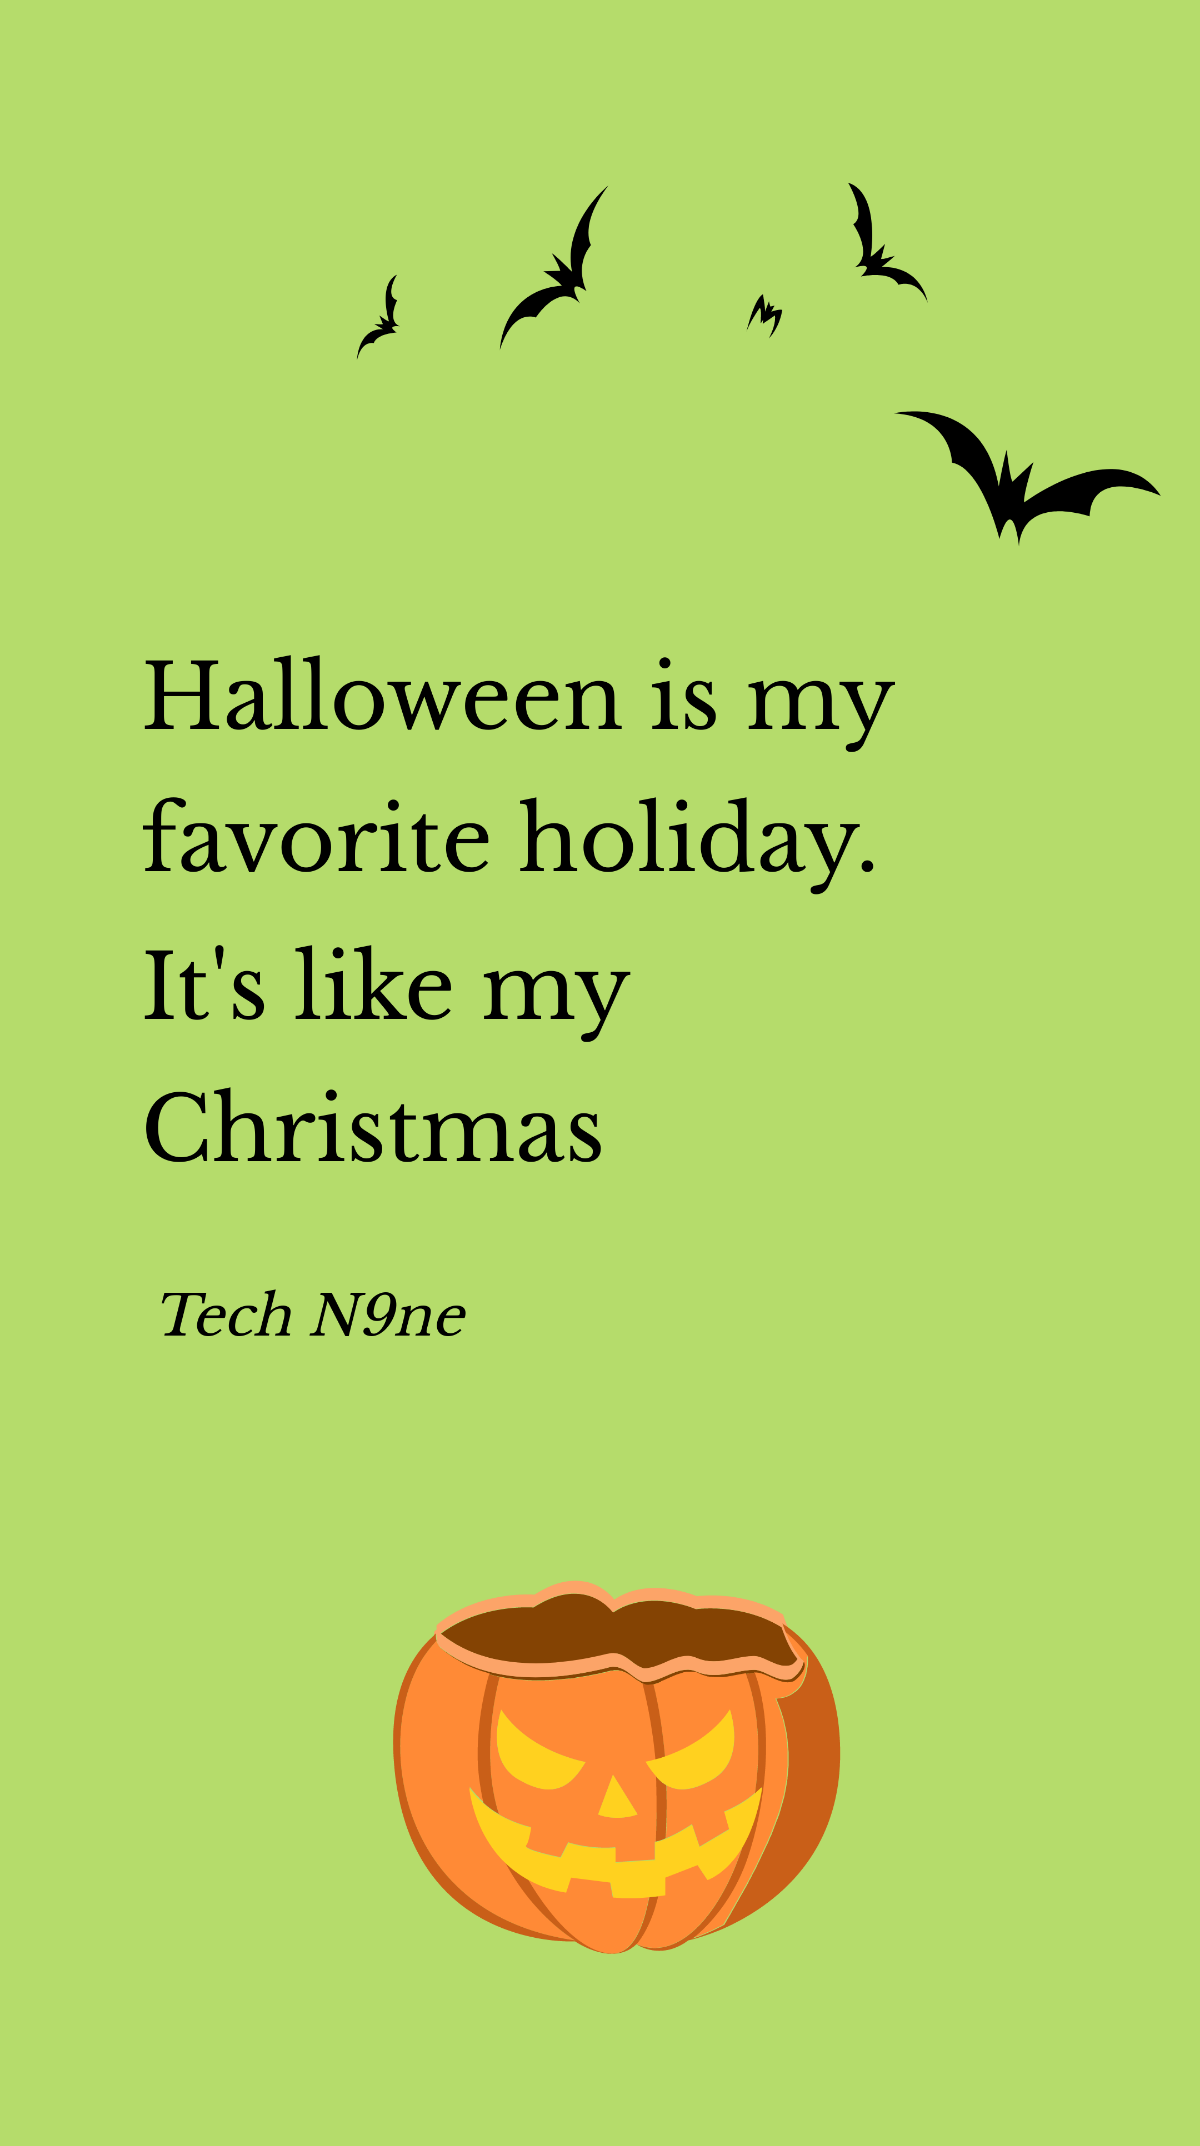 Tech N9ne- Halloween is my favorite holiday. It's like my Christmas. Template